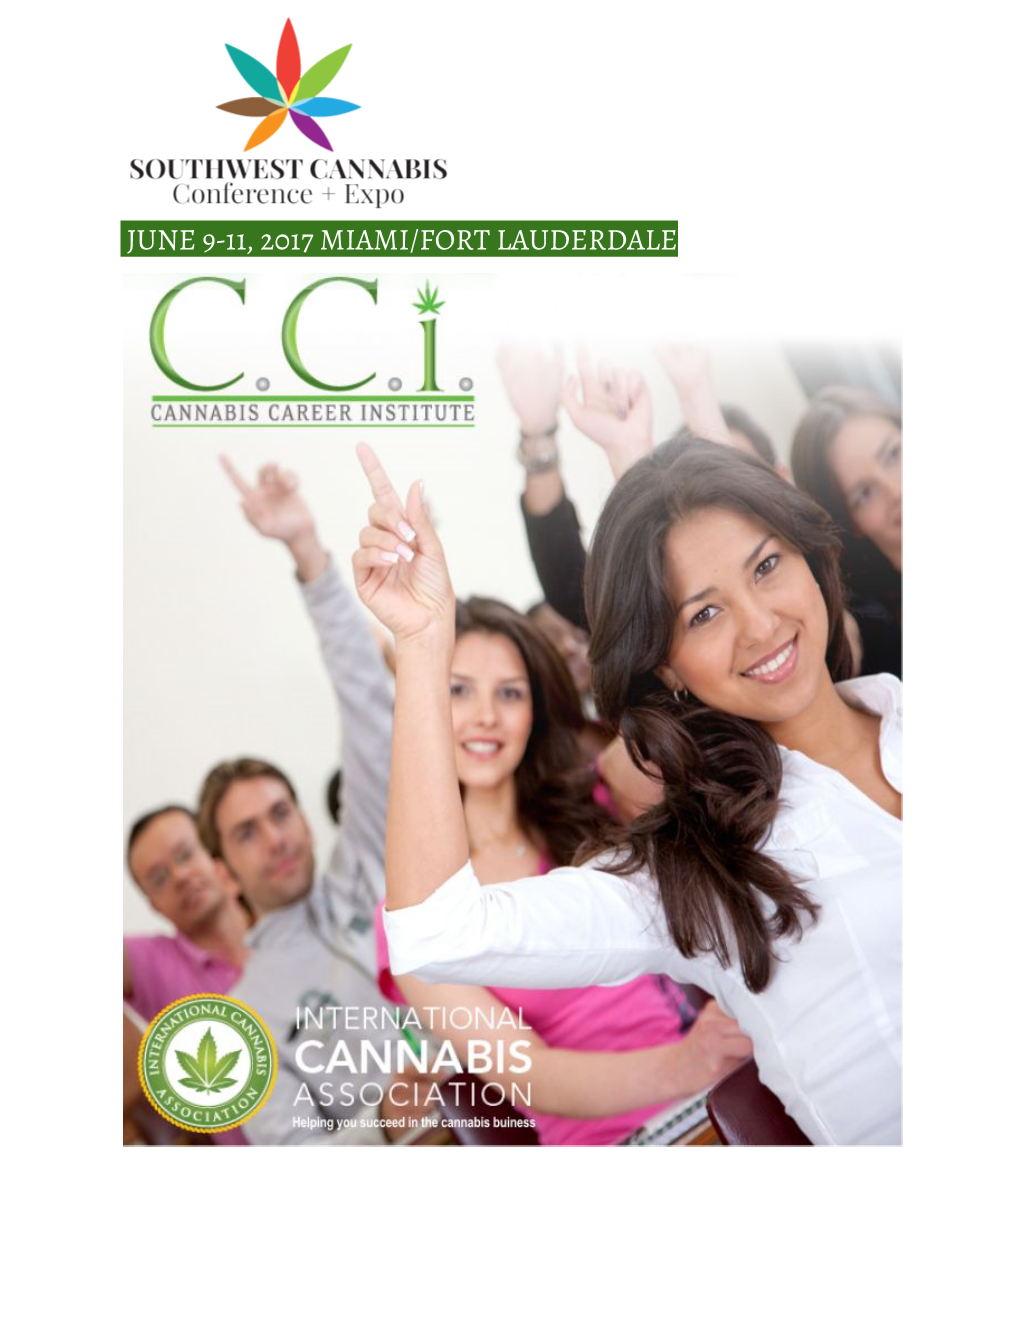 CCI's Southwest Cannabis Conference